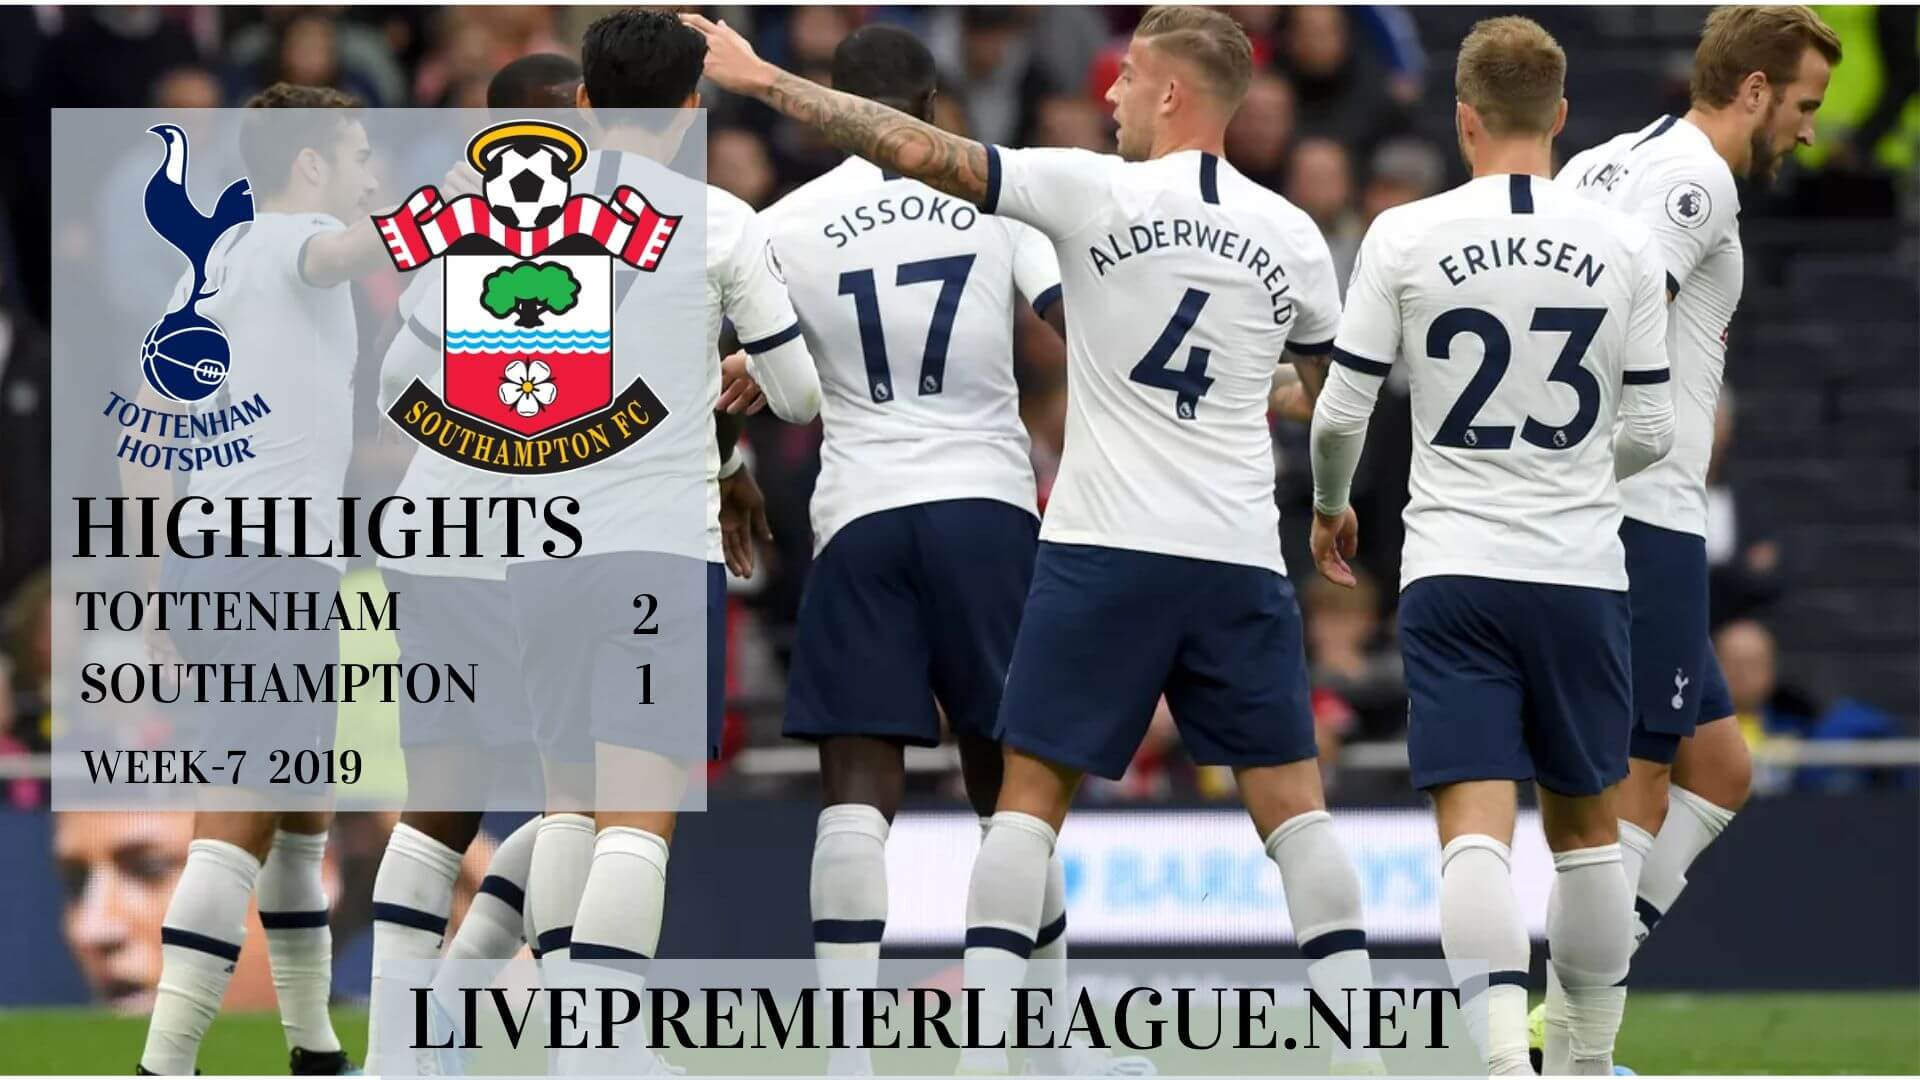 Tottenham Hotspurs vs Southampton Highlights 2019 Week 7